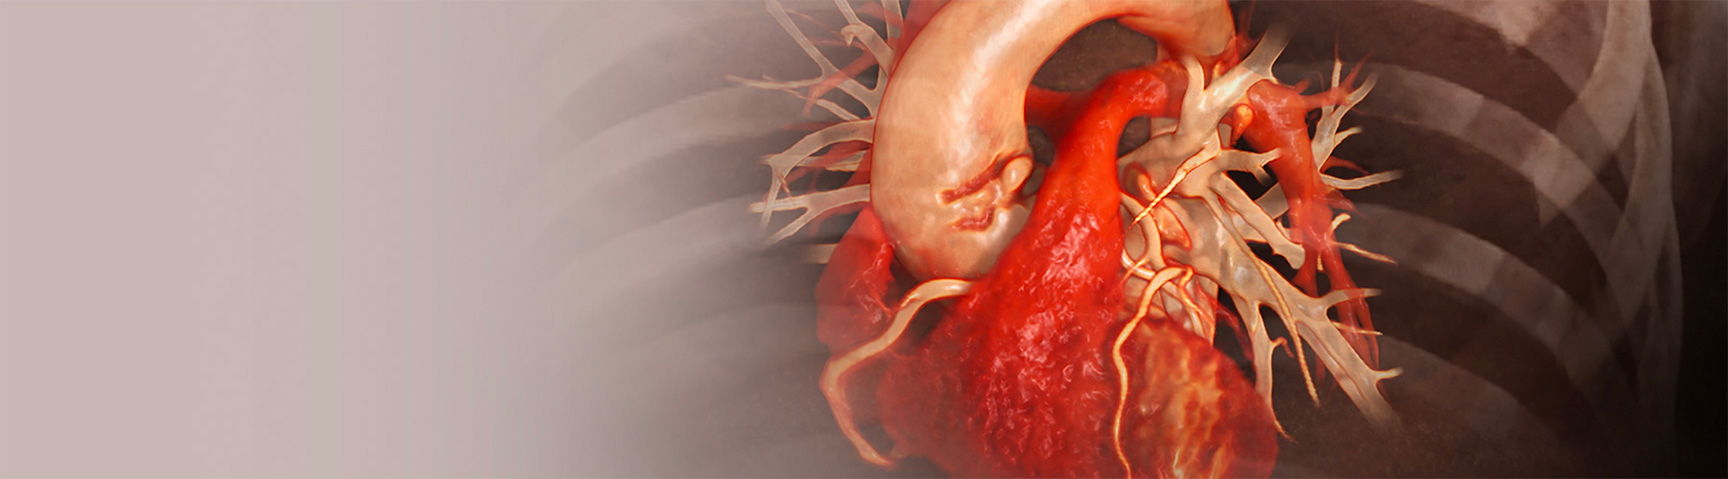 Cardiovascular Advanced Clinical Workflows